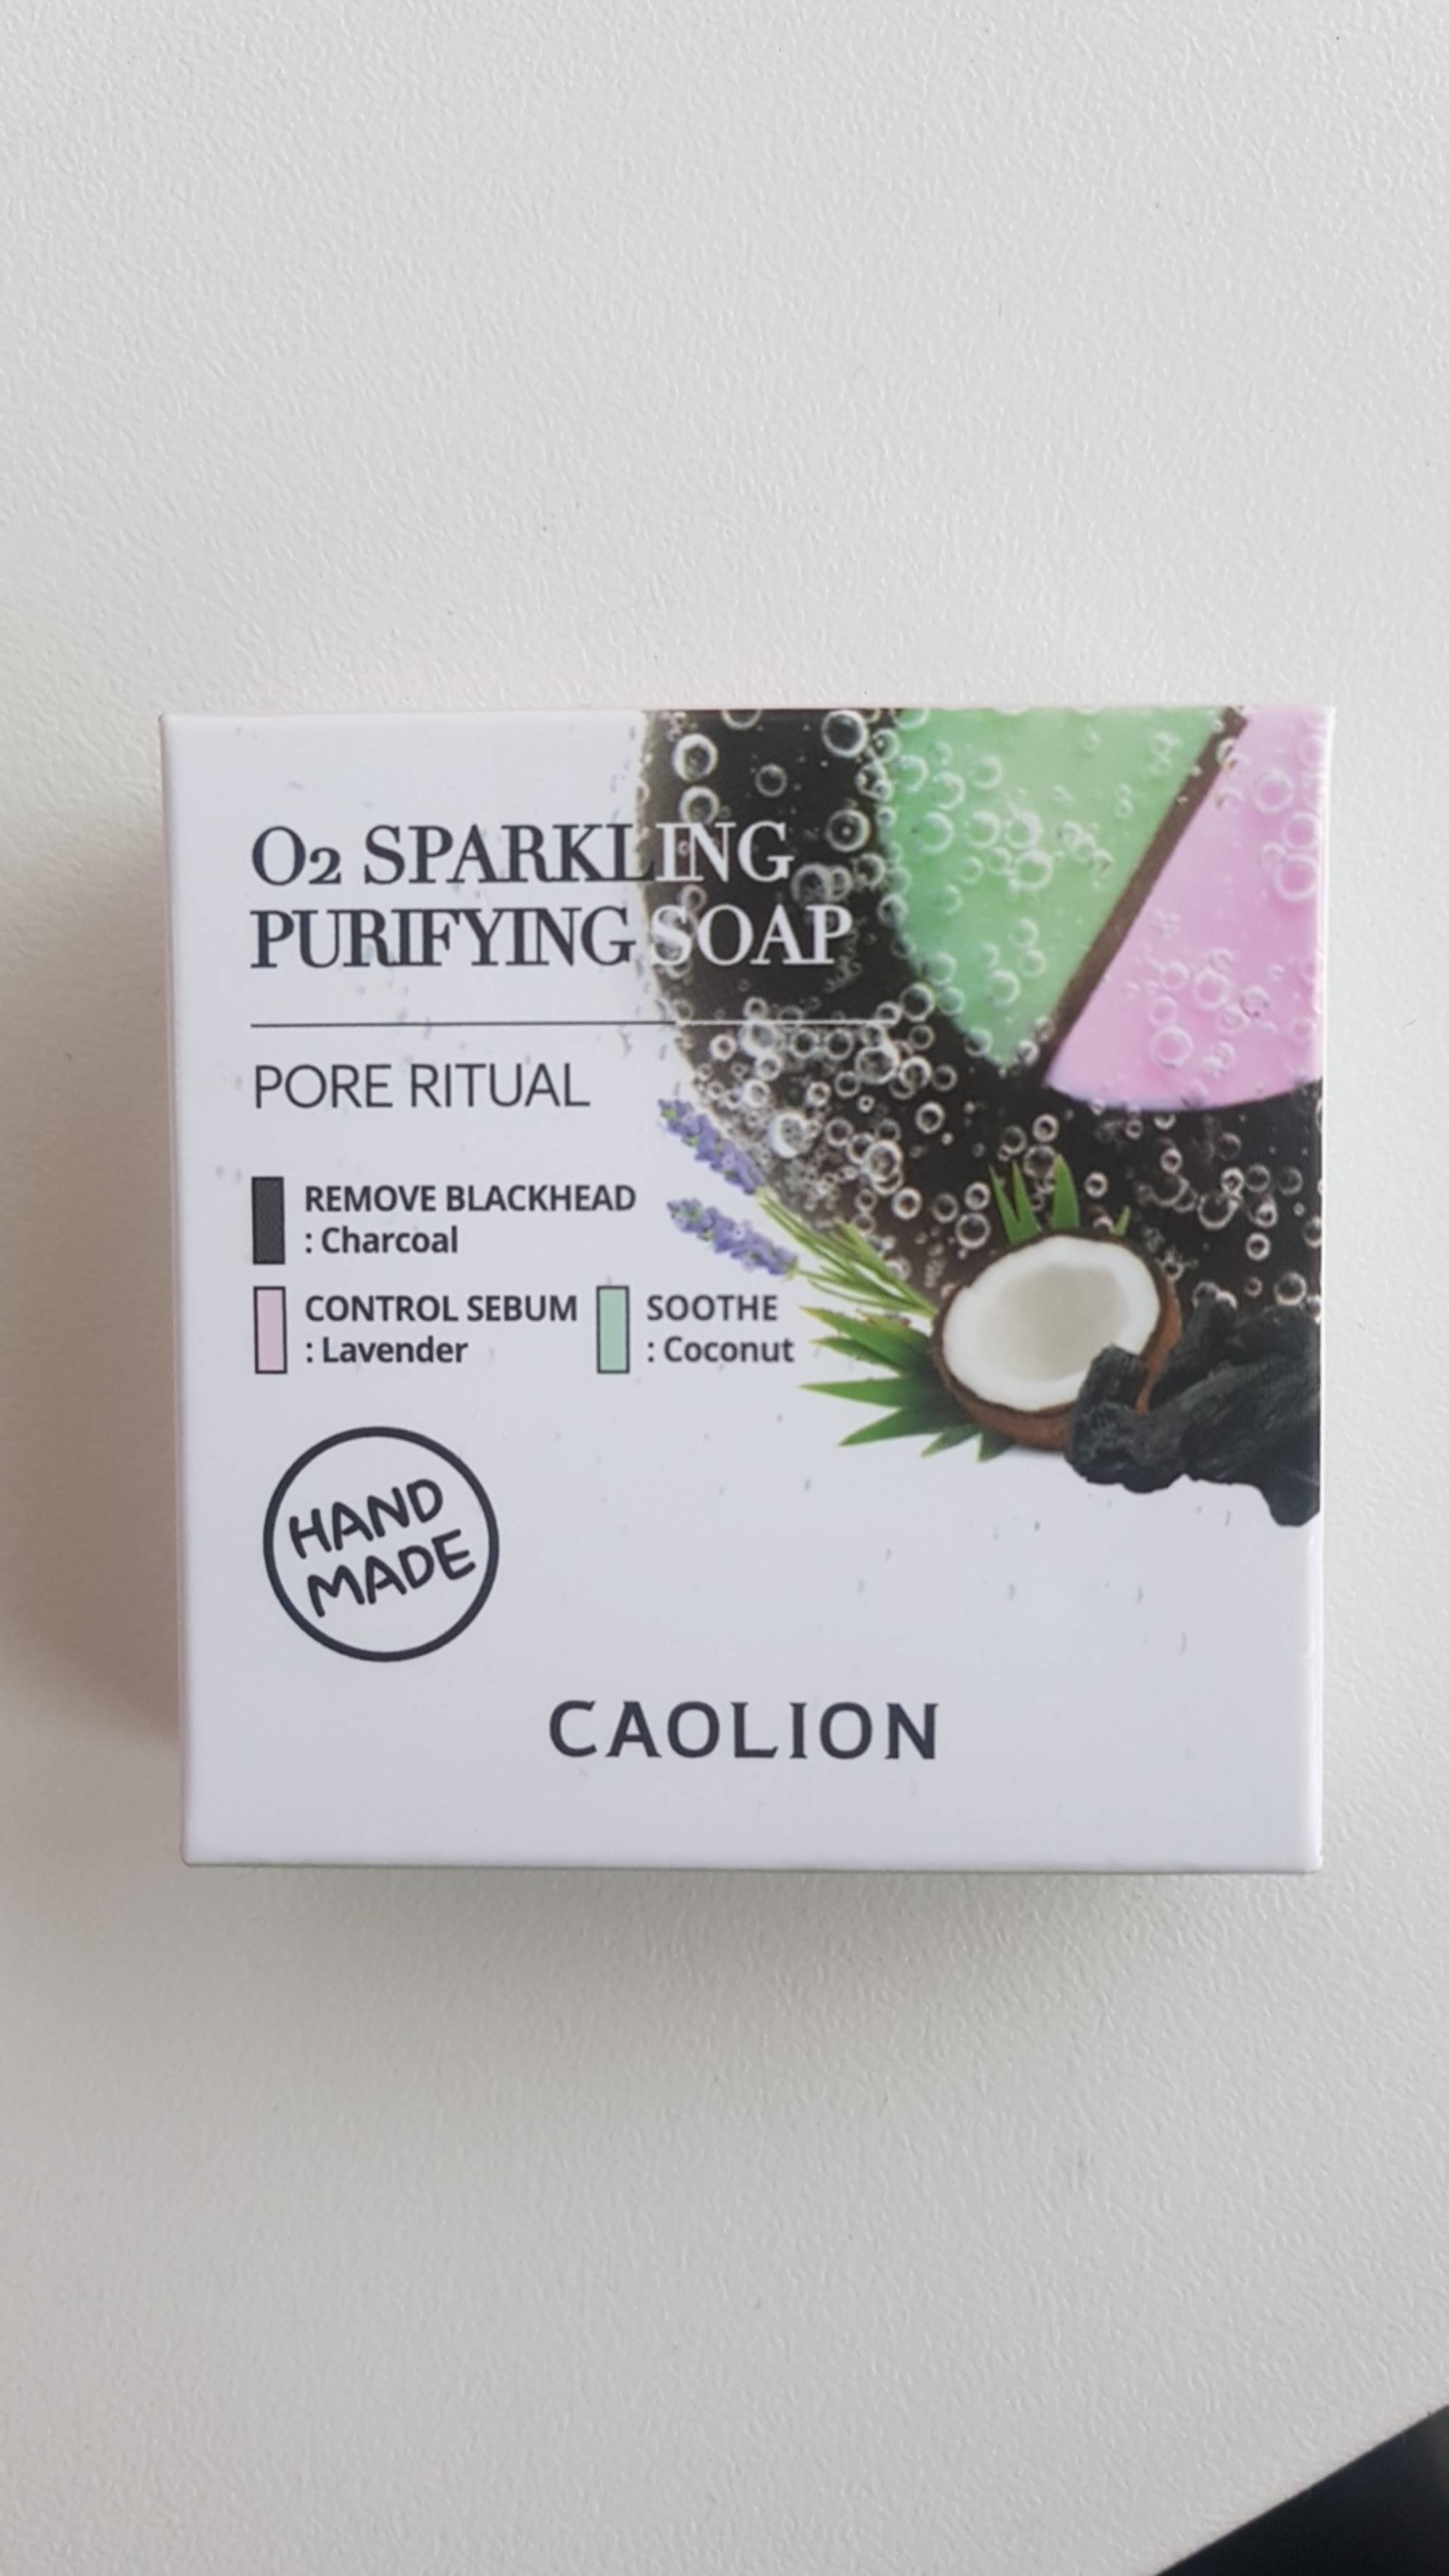 CAOLION - Pore ritual 02 sparkling purifying soap